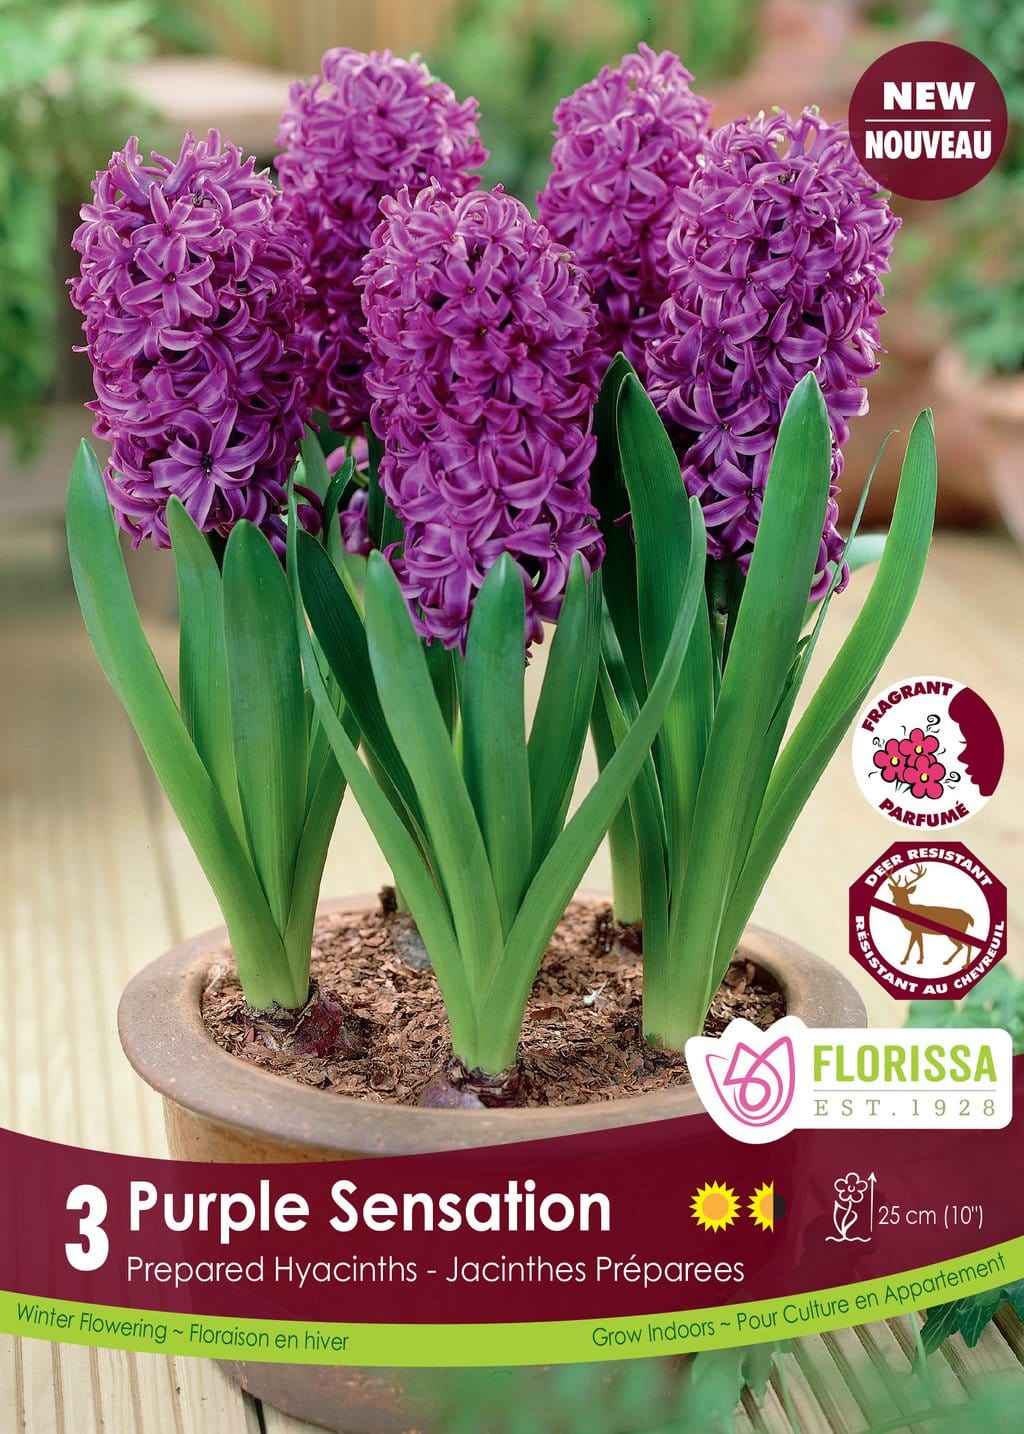 Prepared Hyacinth - Purple Sensation, 3 Pack